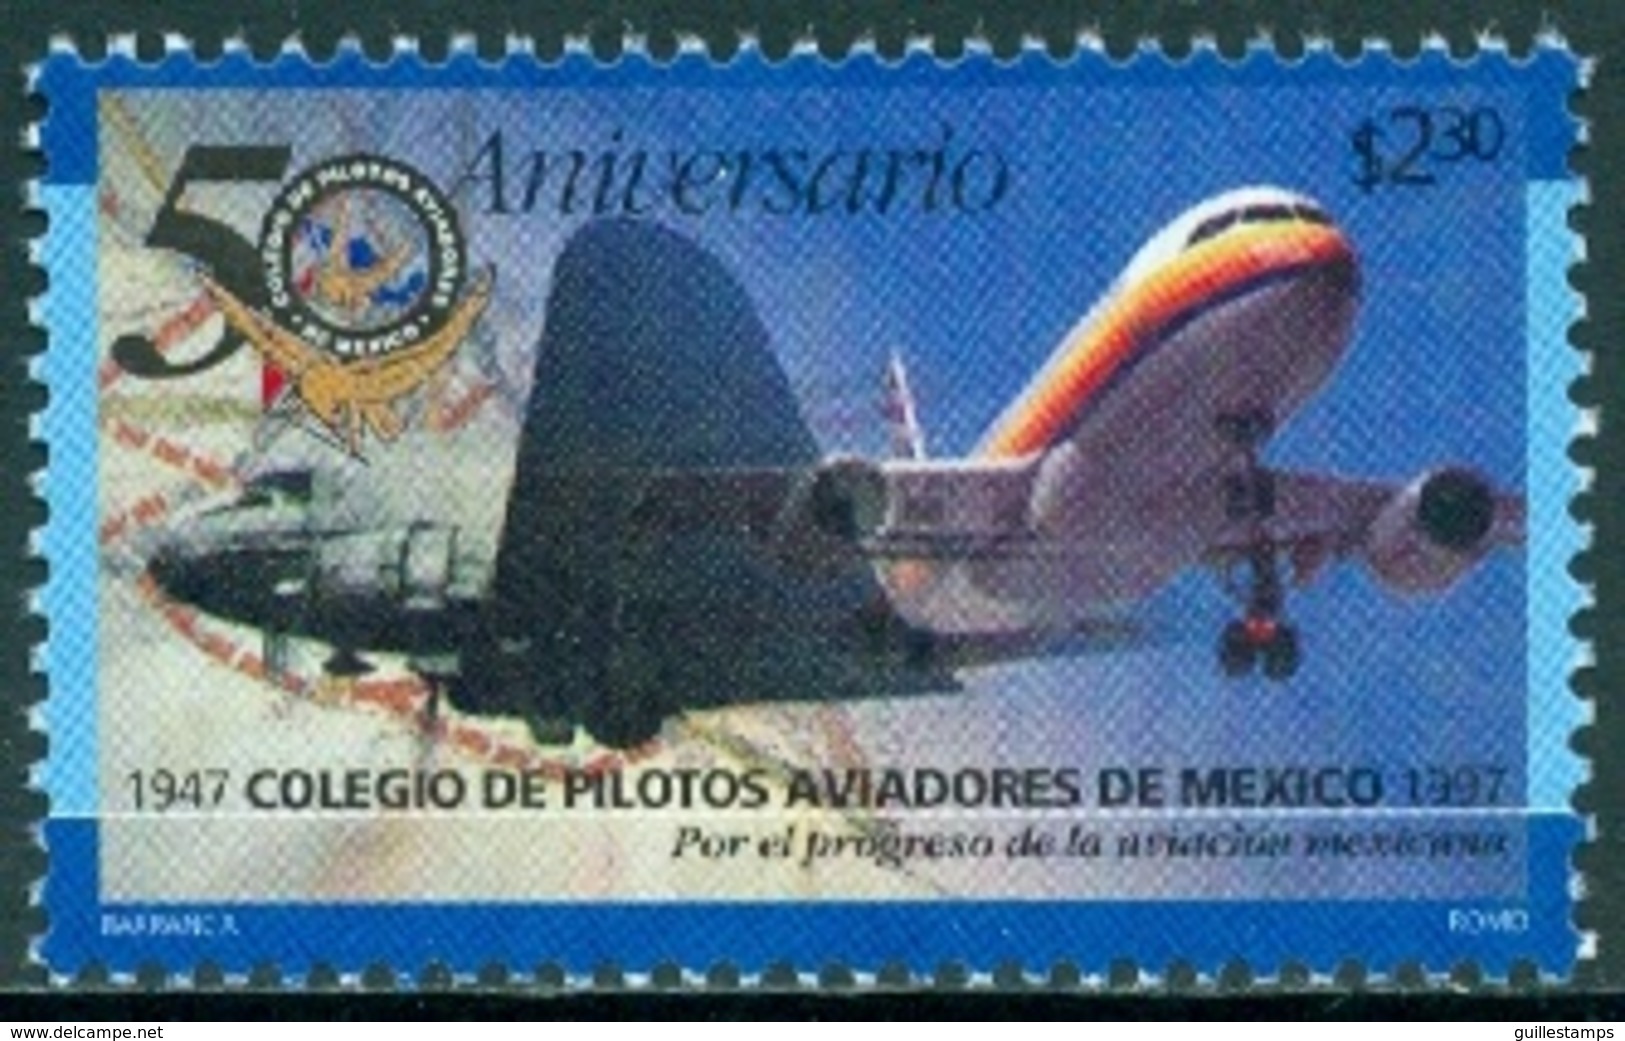 MEXICO 1997 AVIATION PILOTS SCHOOL, AIRCRAFT** (MNH) - Mexico